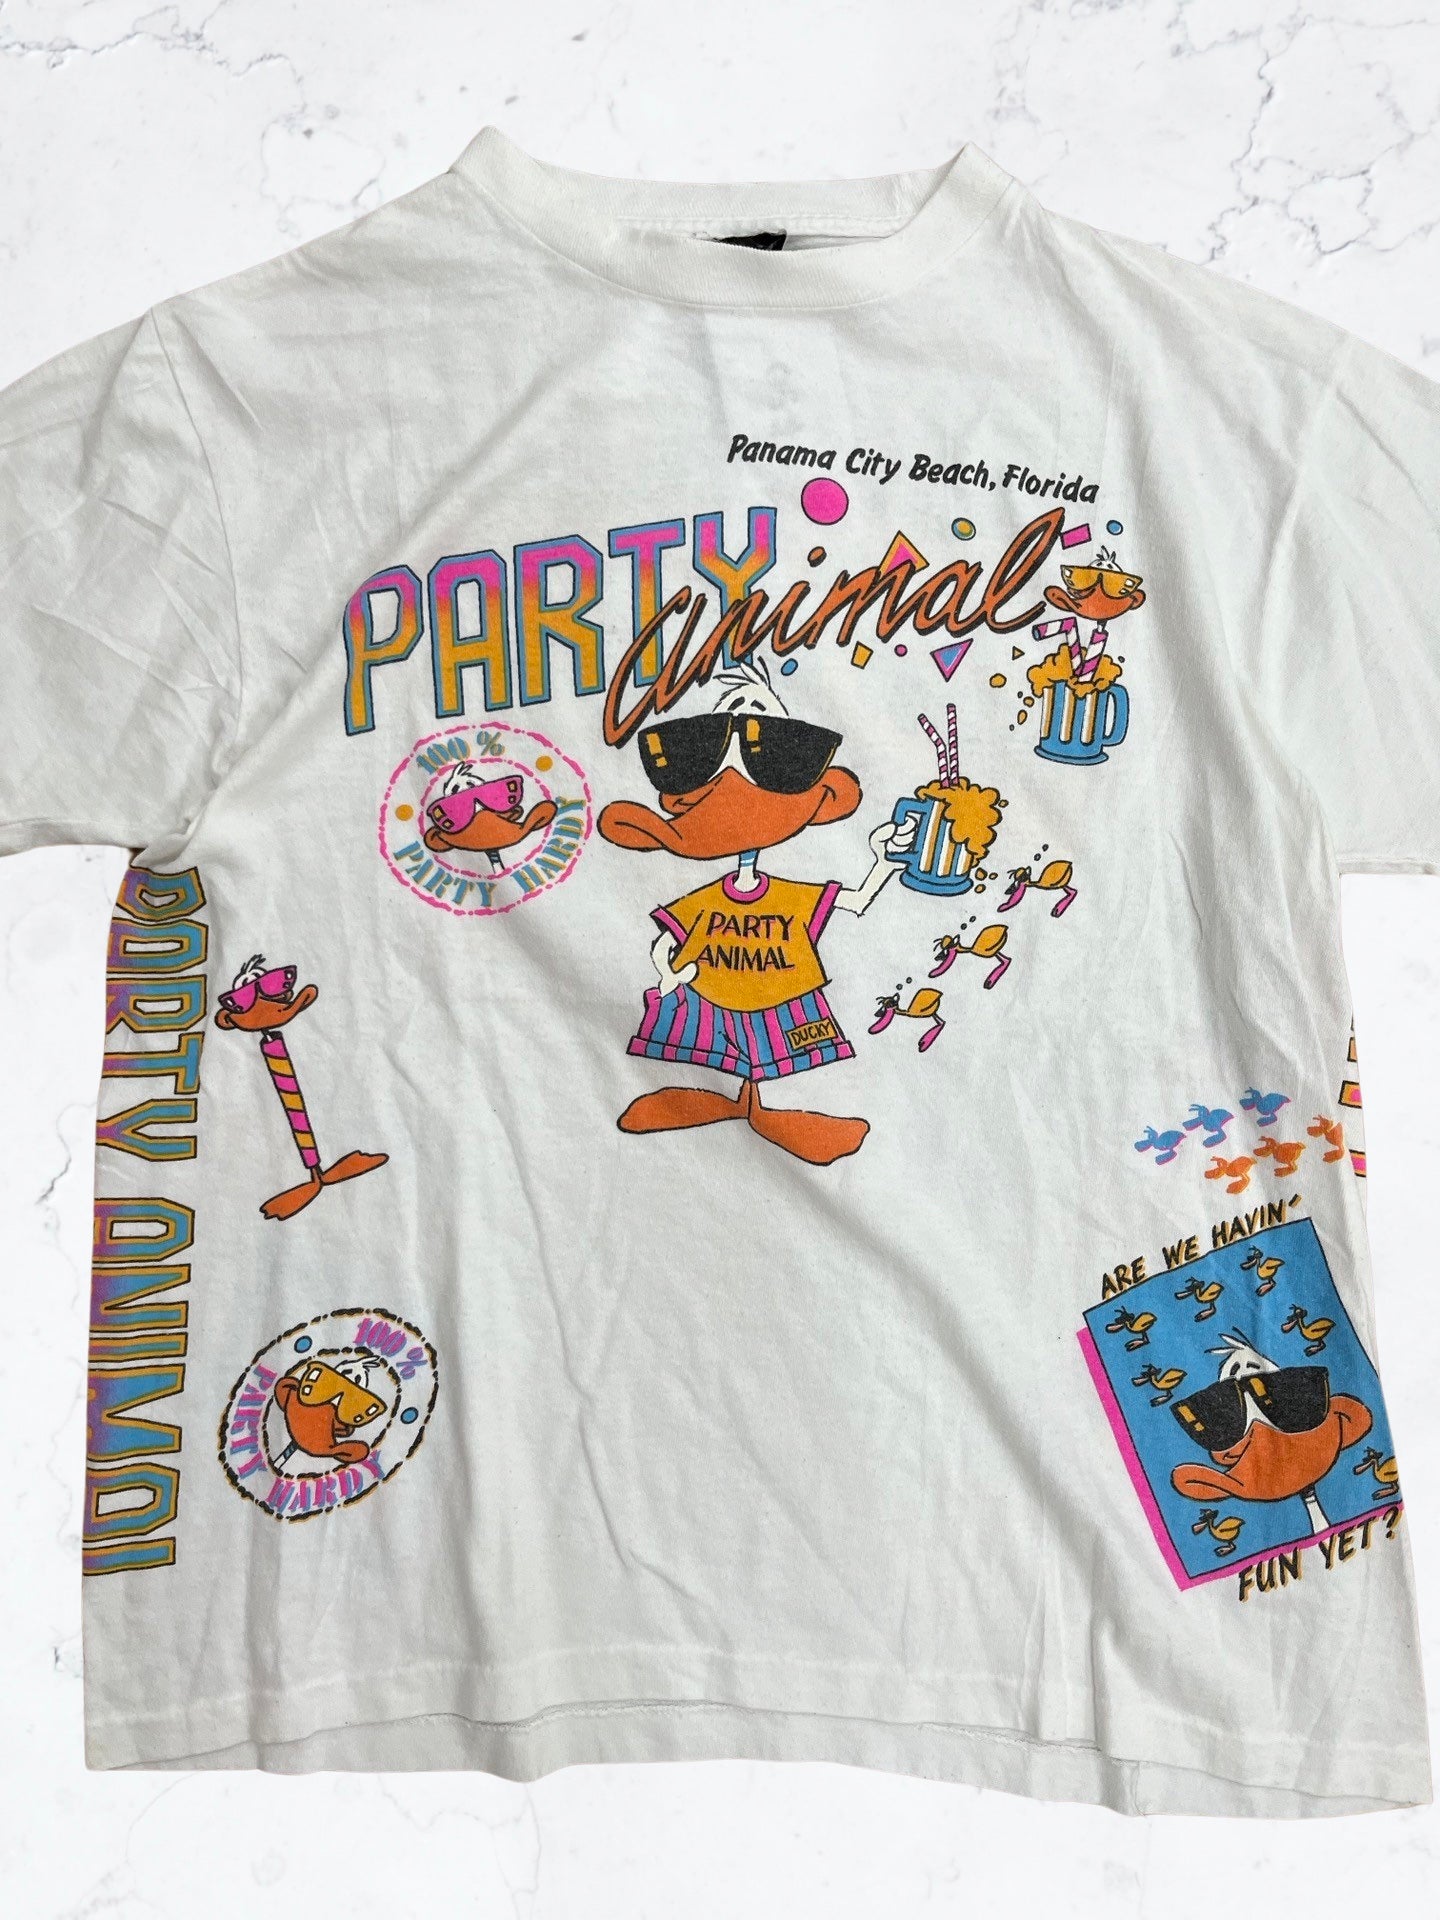 Vintage 90's Panama Party tee